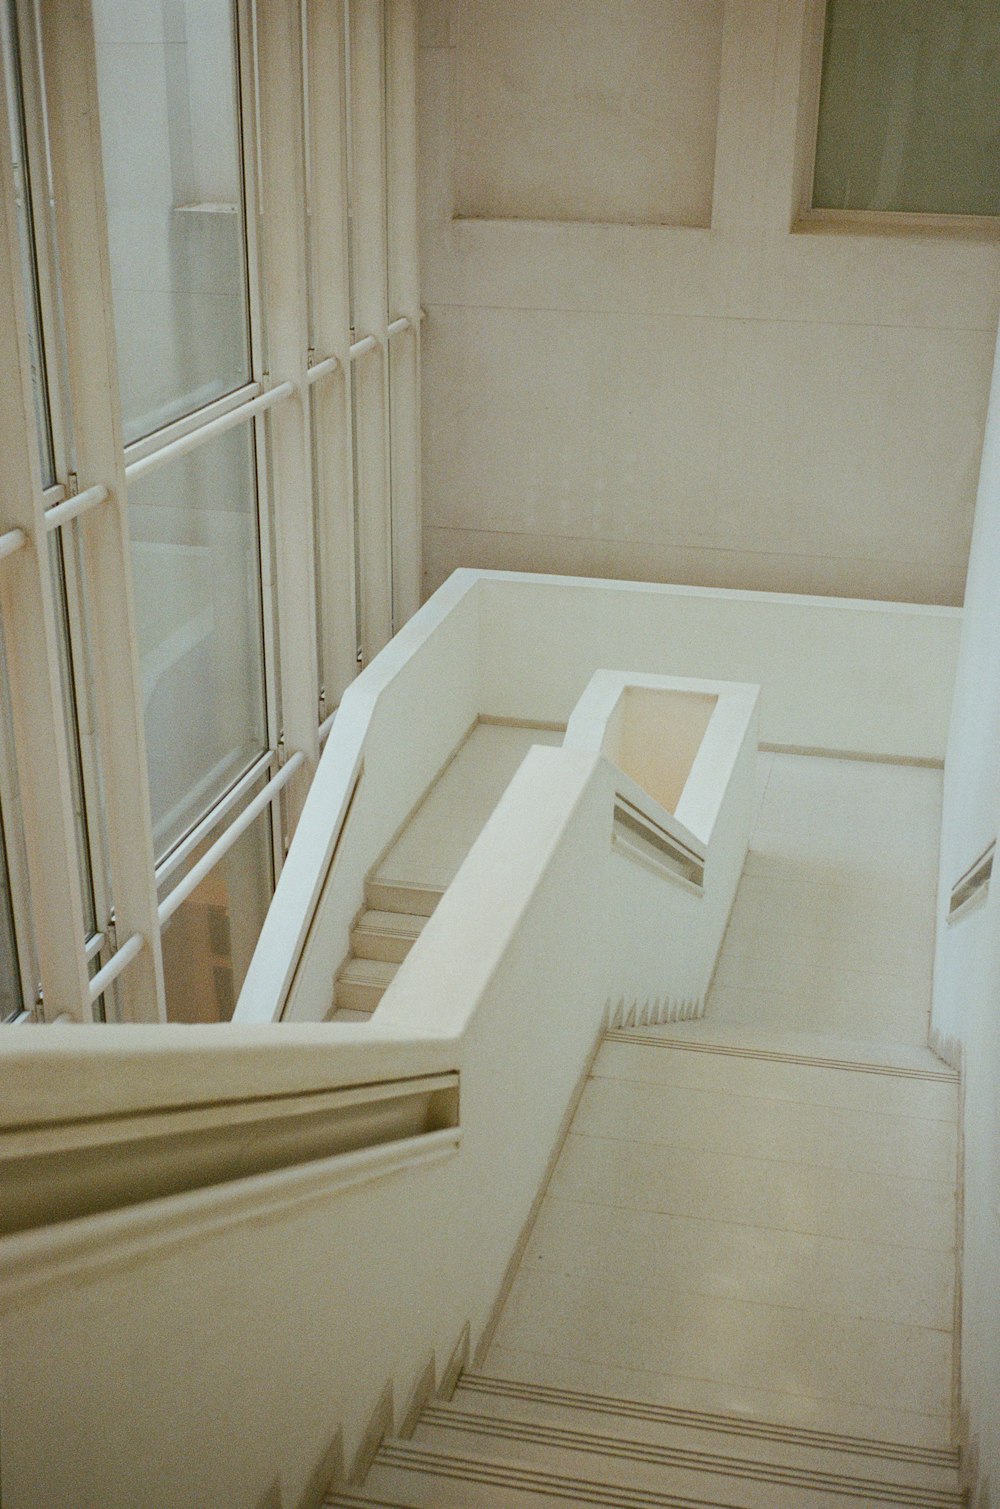 Escalera de madera blanca cerca de ventana de vidrio con marco de madera blanca